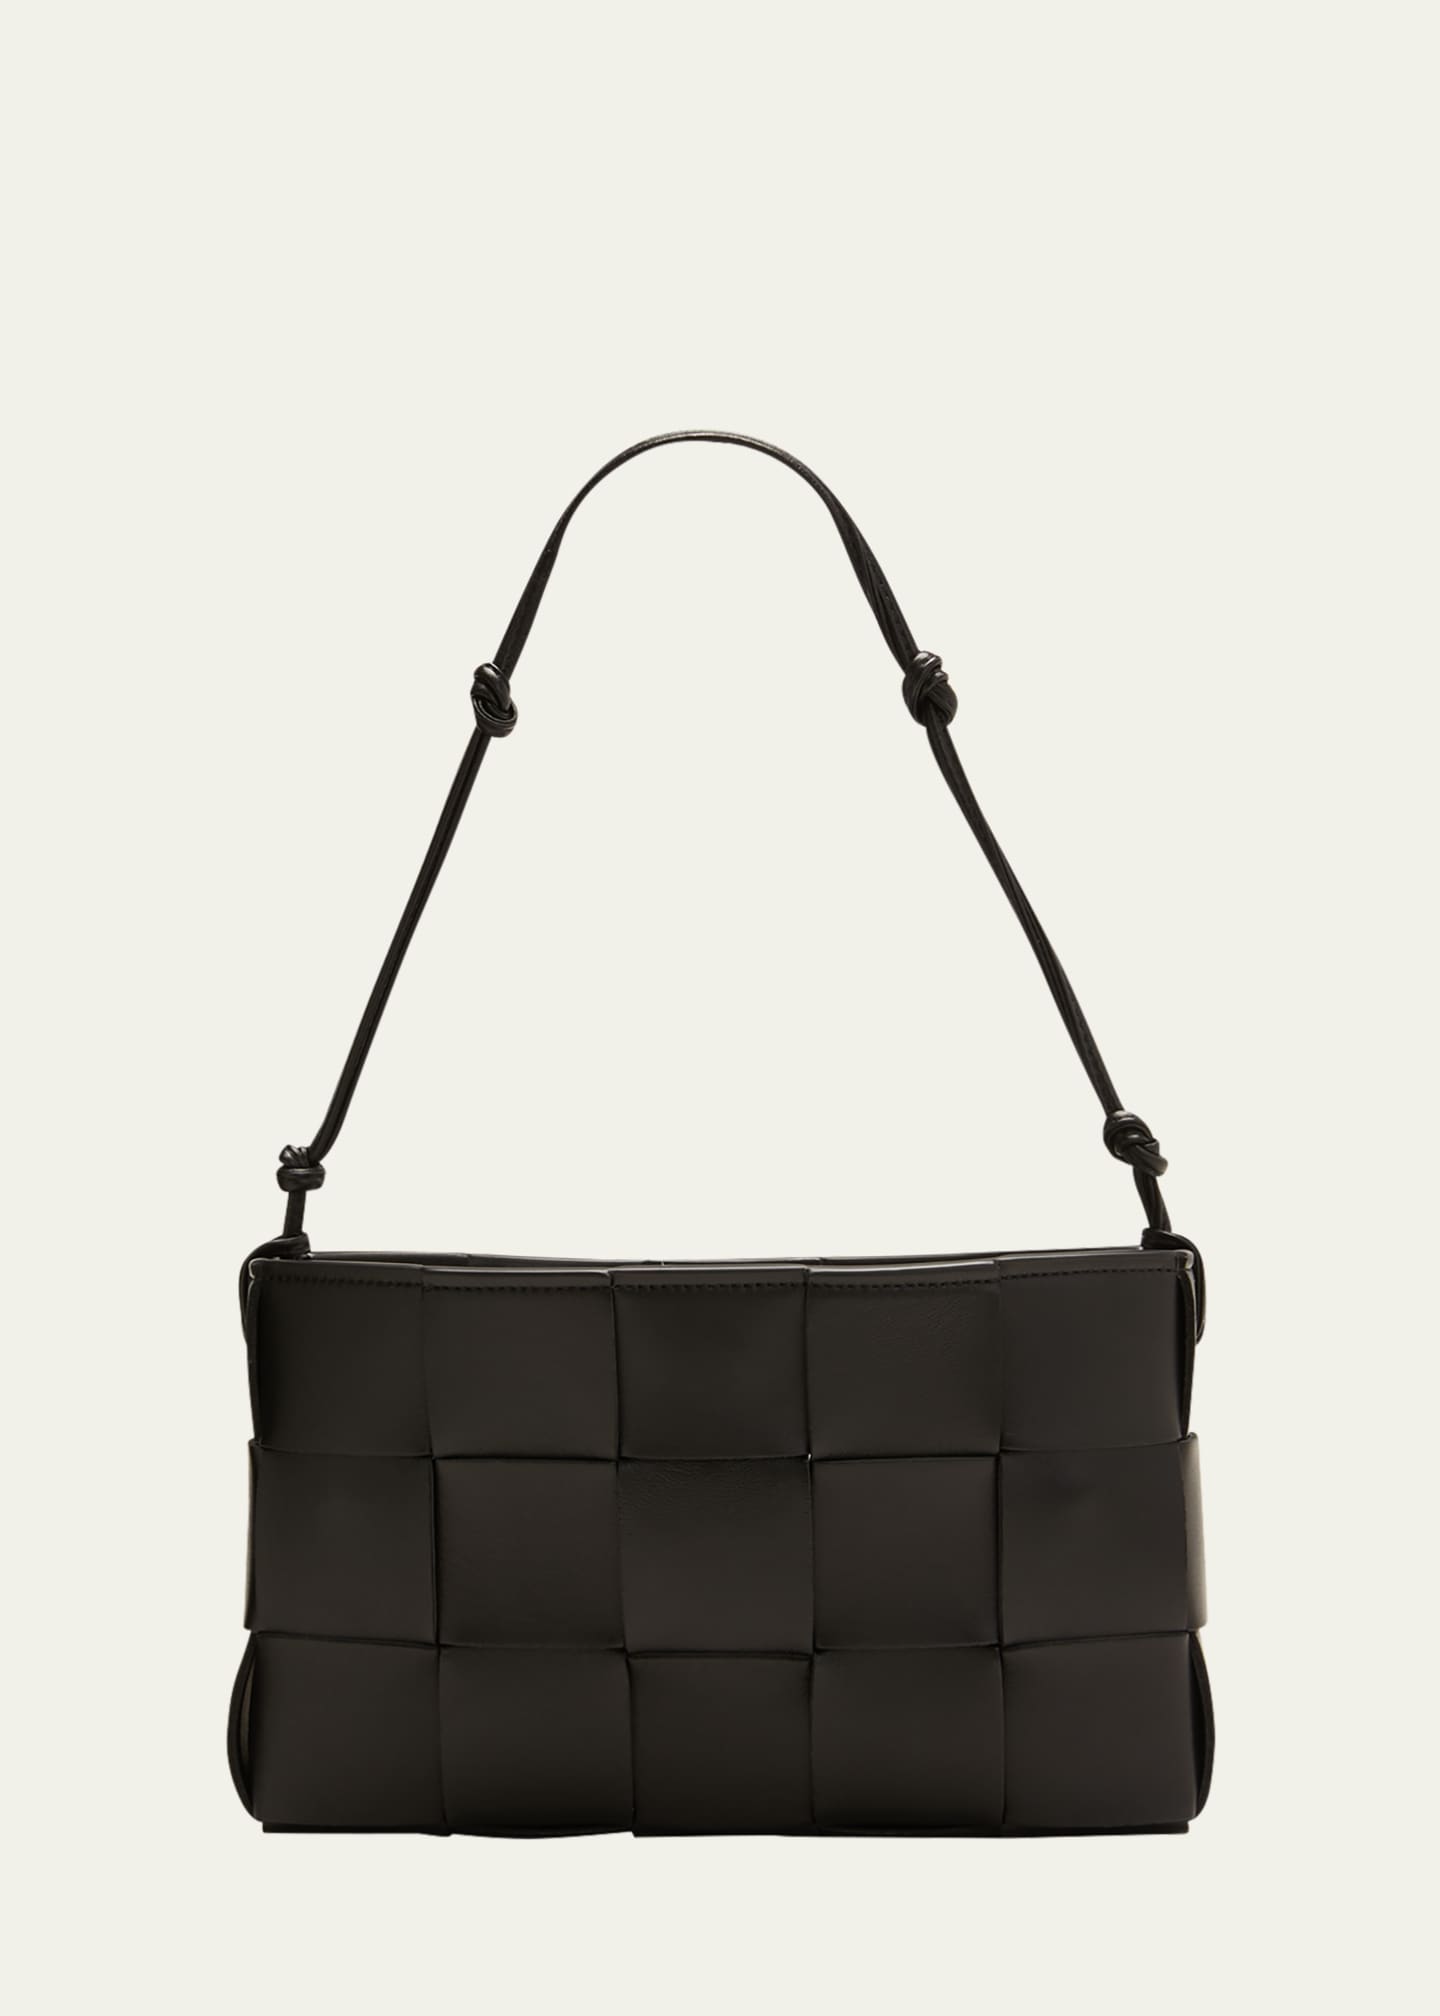 Bottega Veneta Mini Cassette Intrecciato Leather Shoulder Bag - Black - One Size